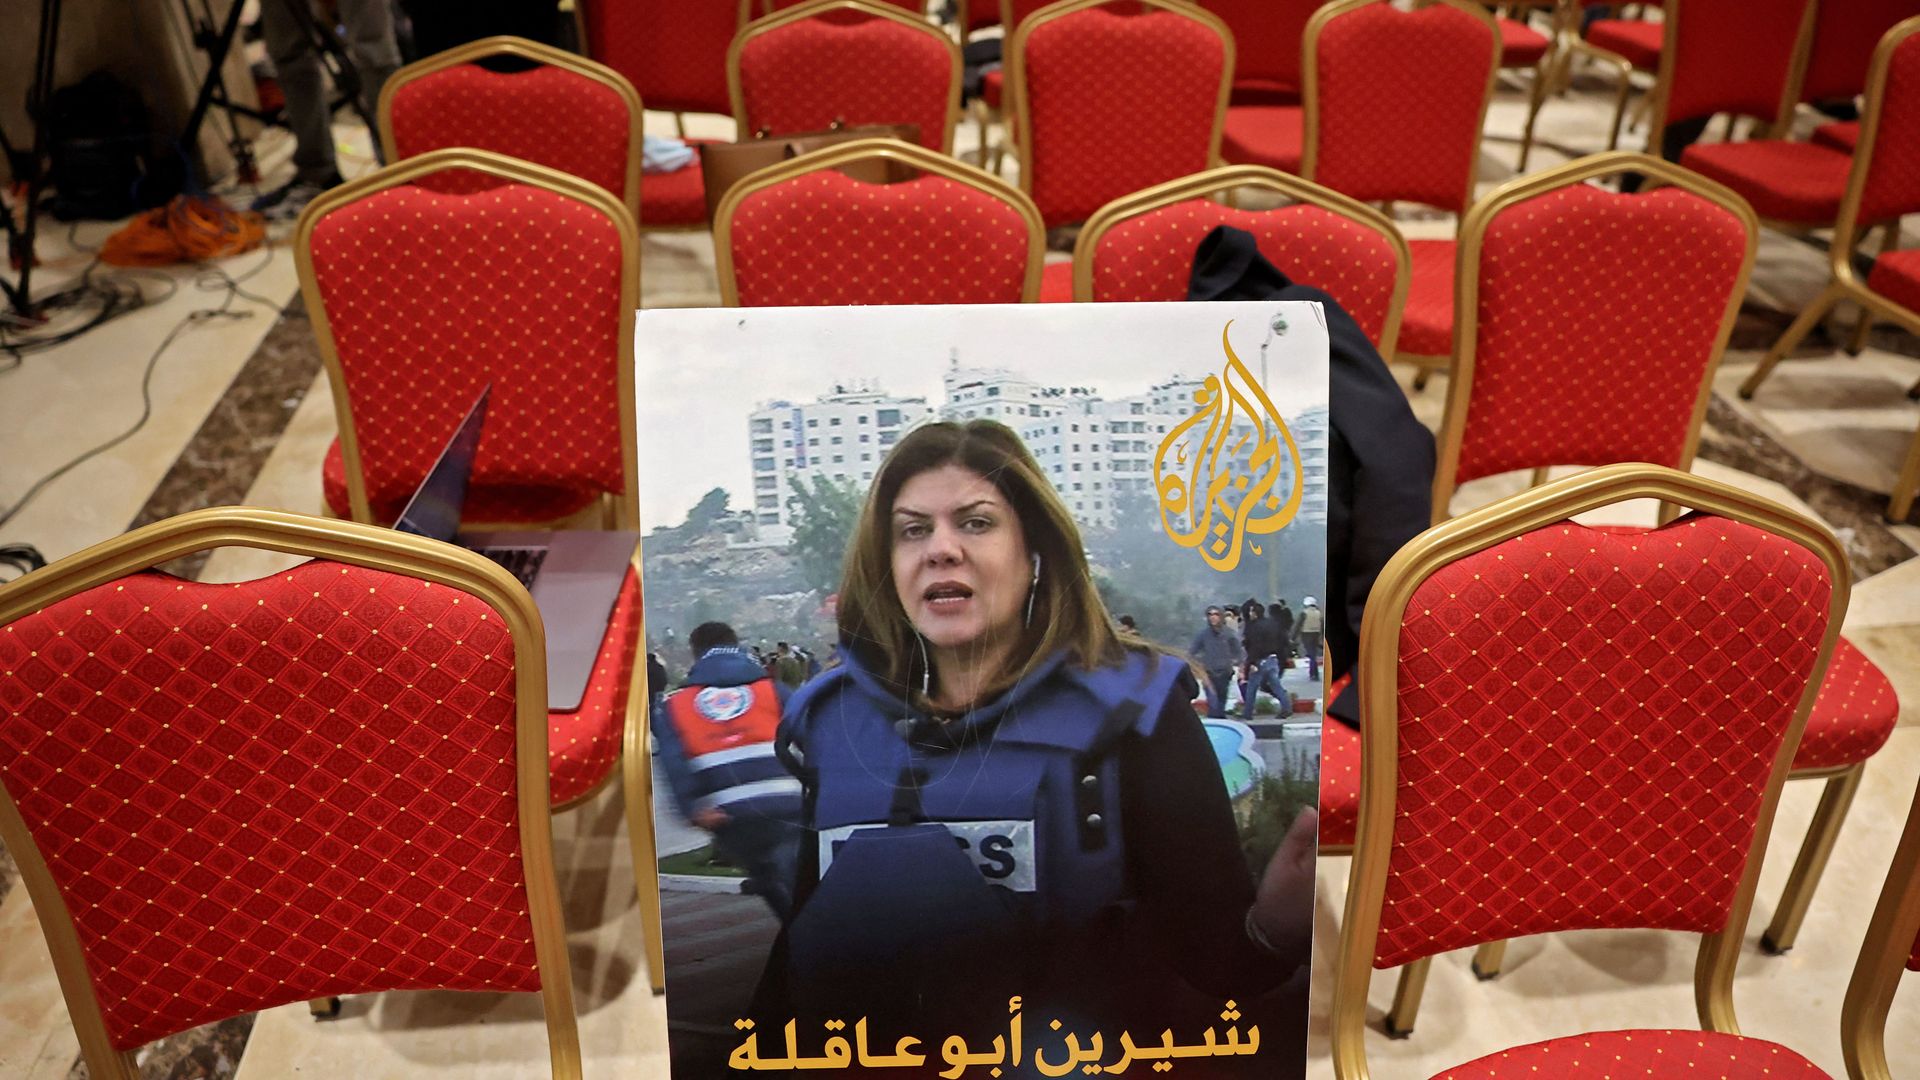 A photo of slain US-Palestinian correspondent Shireen Abu Akleh